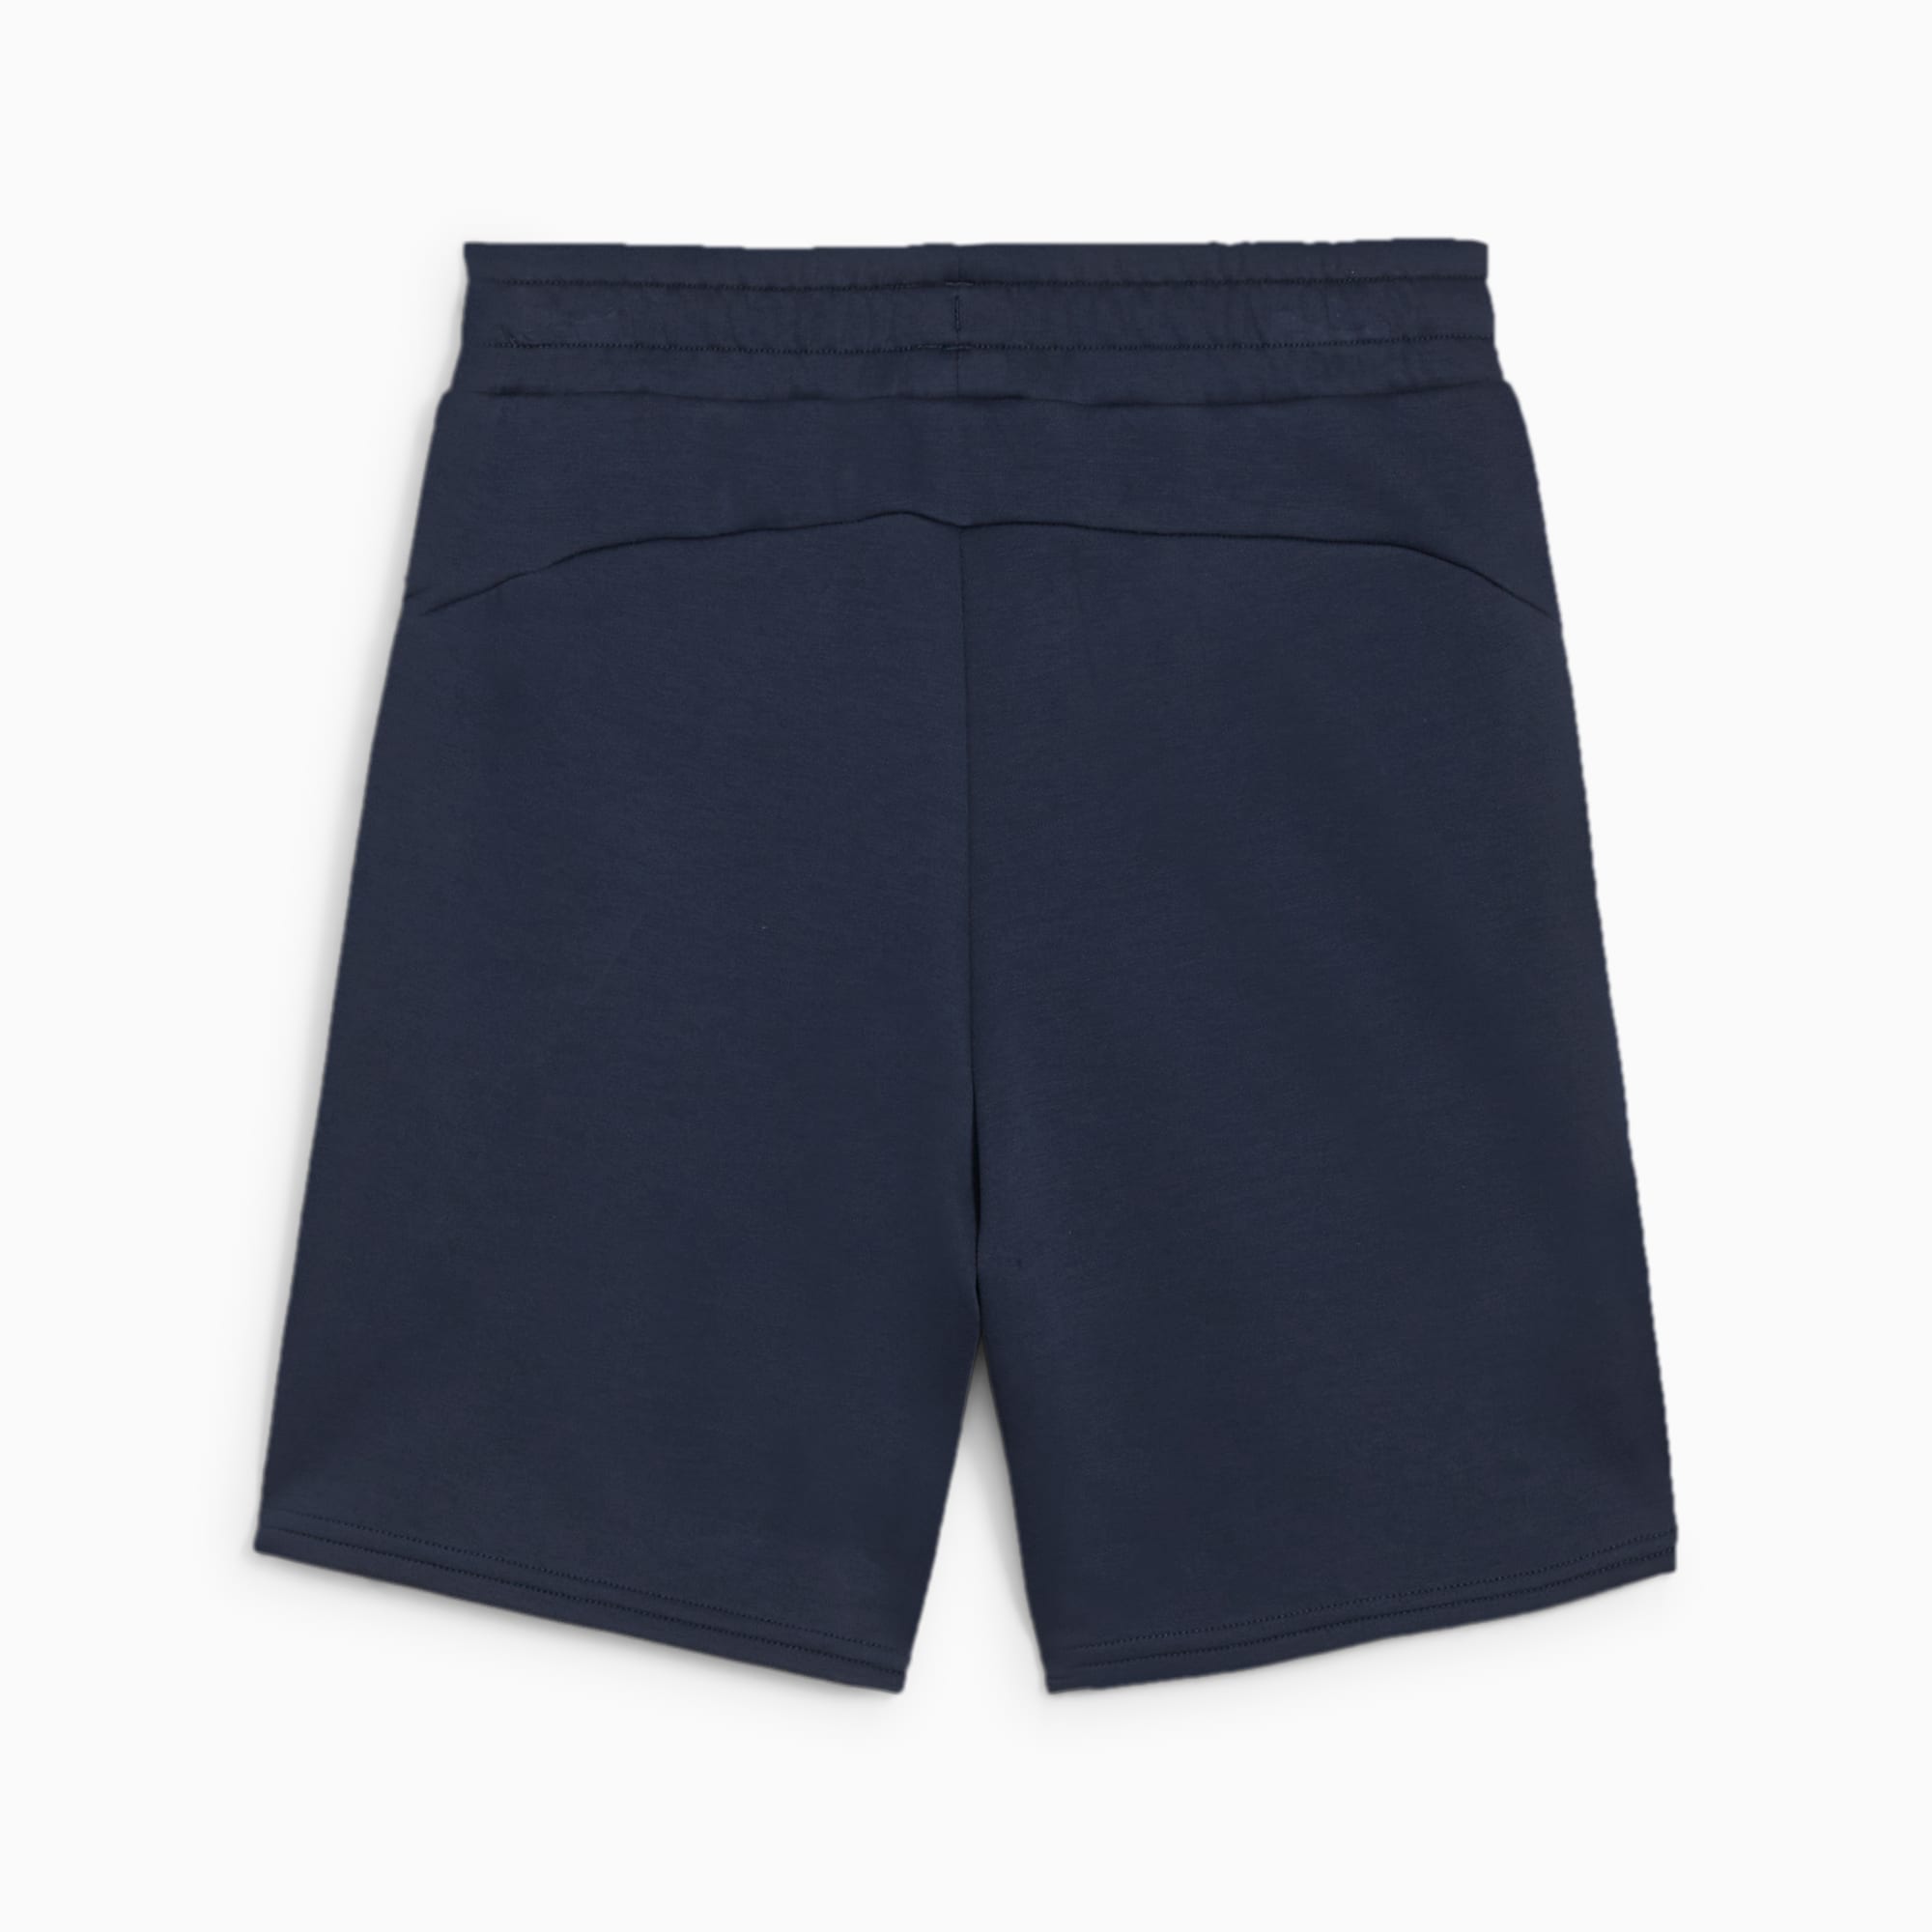 PUMA Evostripe Youth Shorts, Dark Blue, Size 116, Clothing